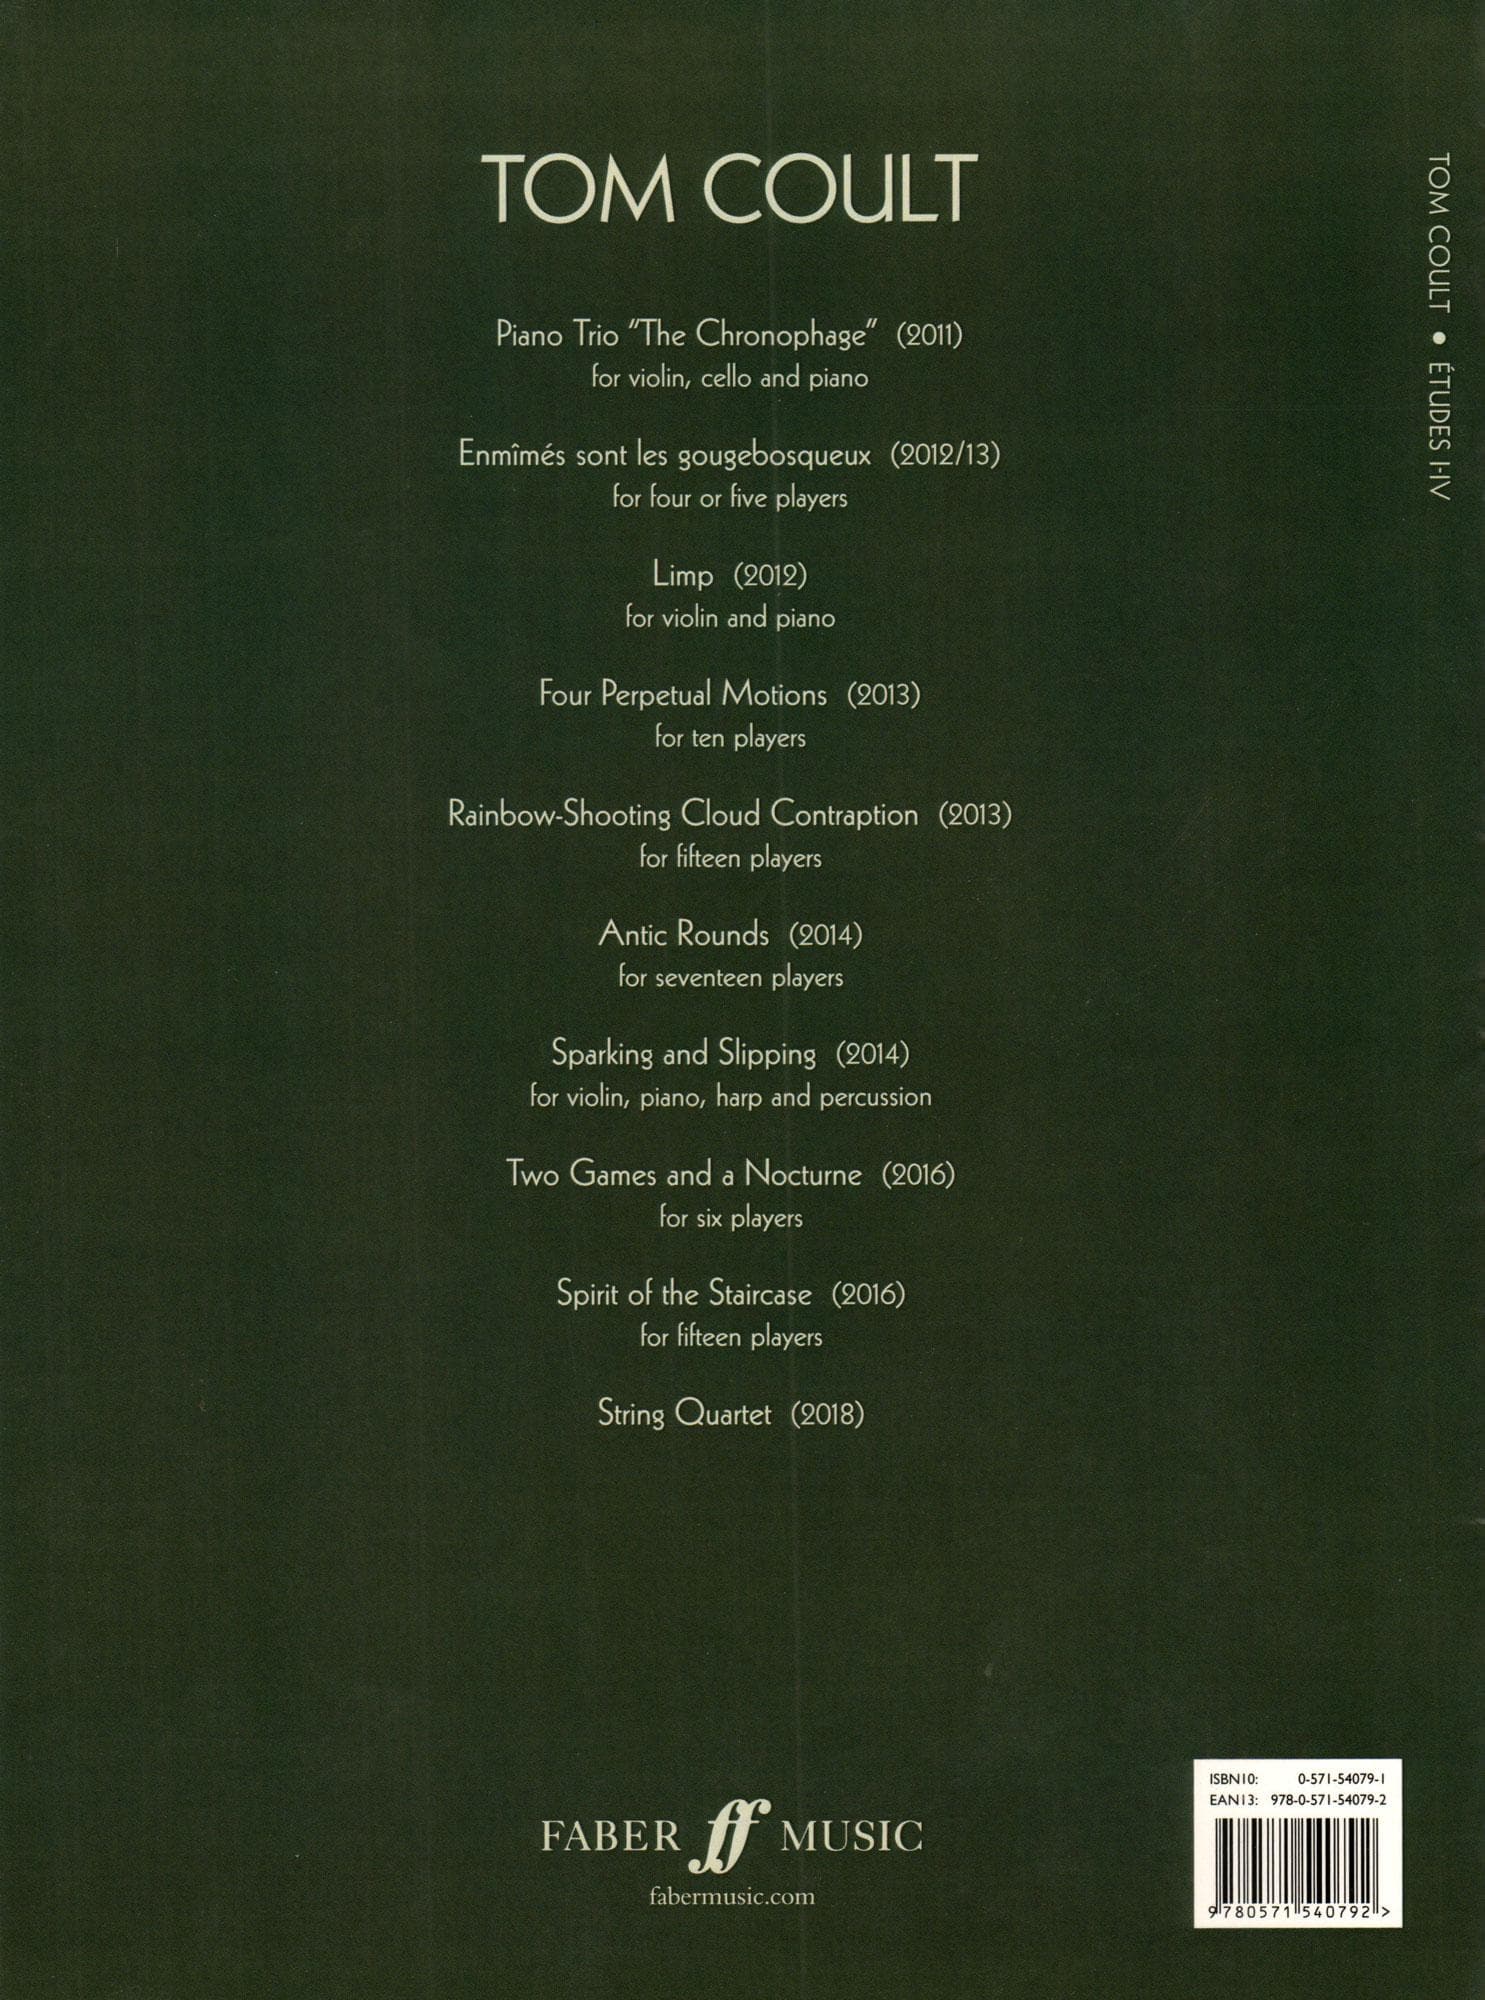 Coult, Tom - Etudes I-IV for Solo Violin - Faber Music Edition